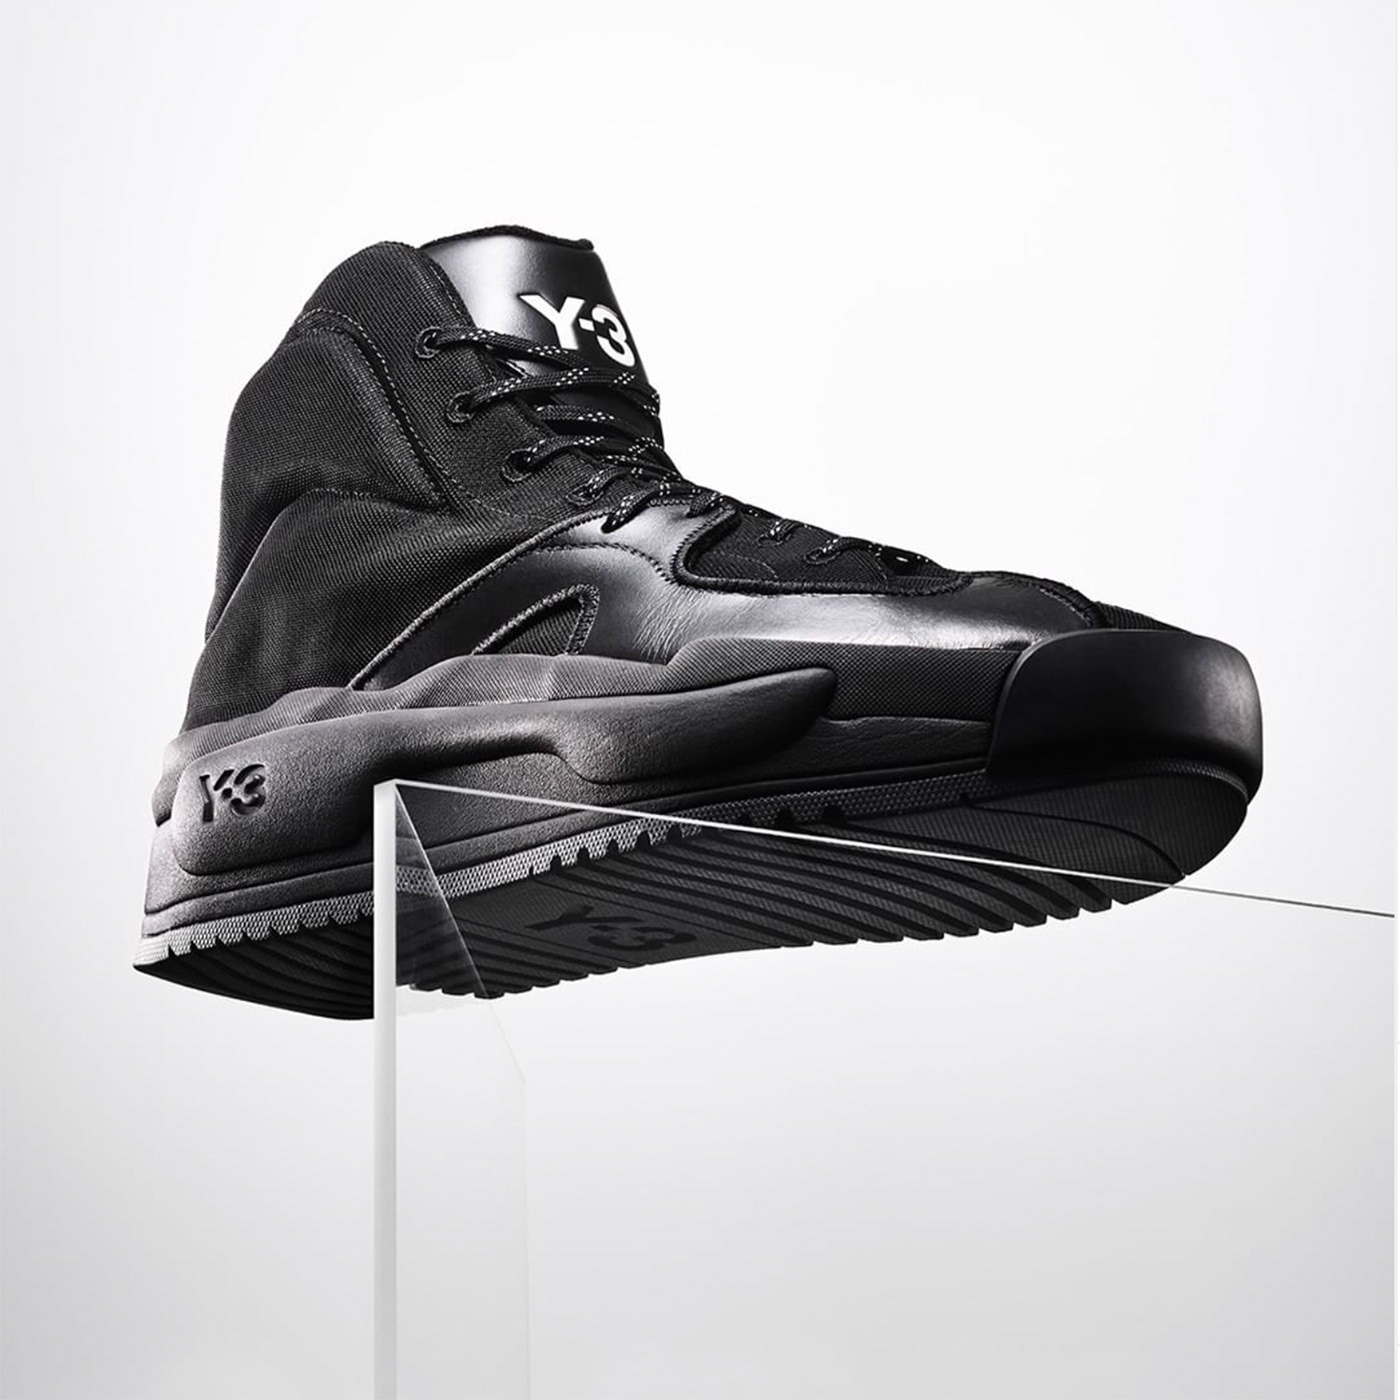 adidas footwear footwear designer footweardesign sneaker SneakerDesign Y-3 yohji yamamoto Collaboration